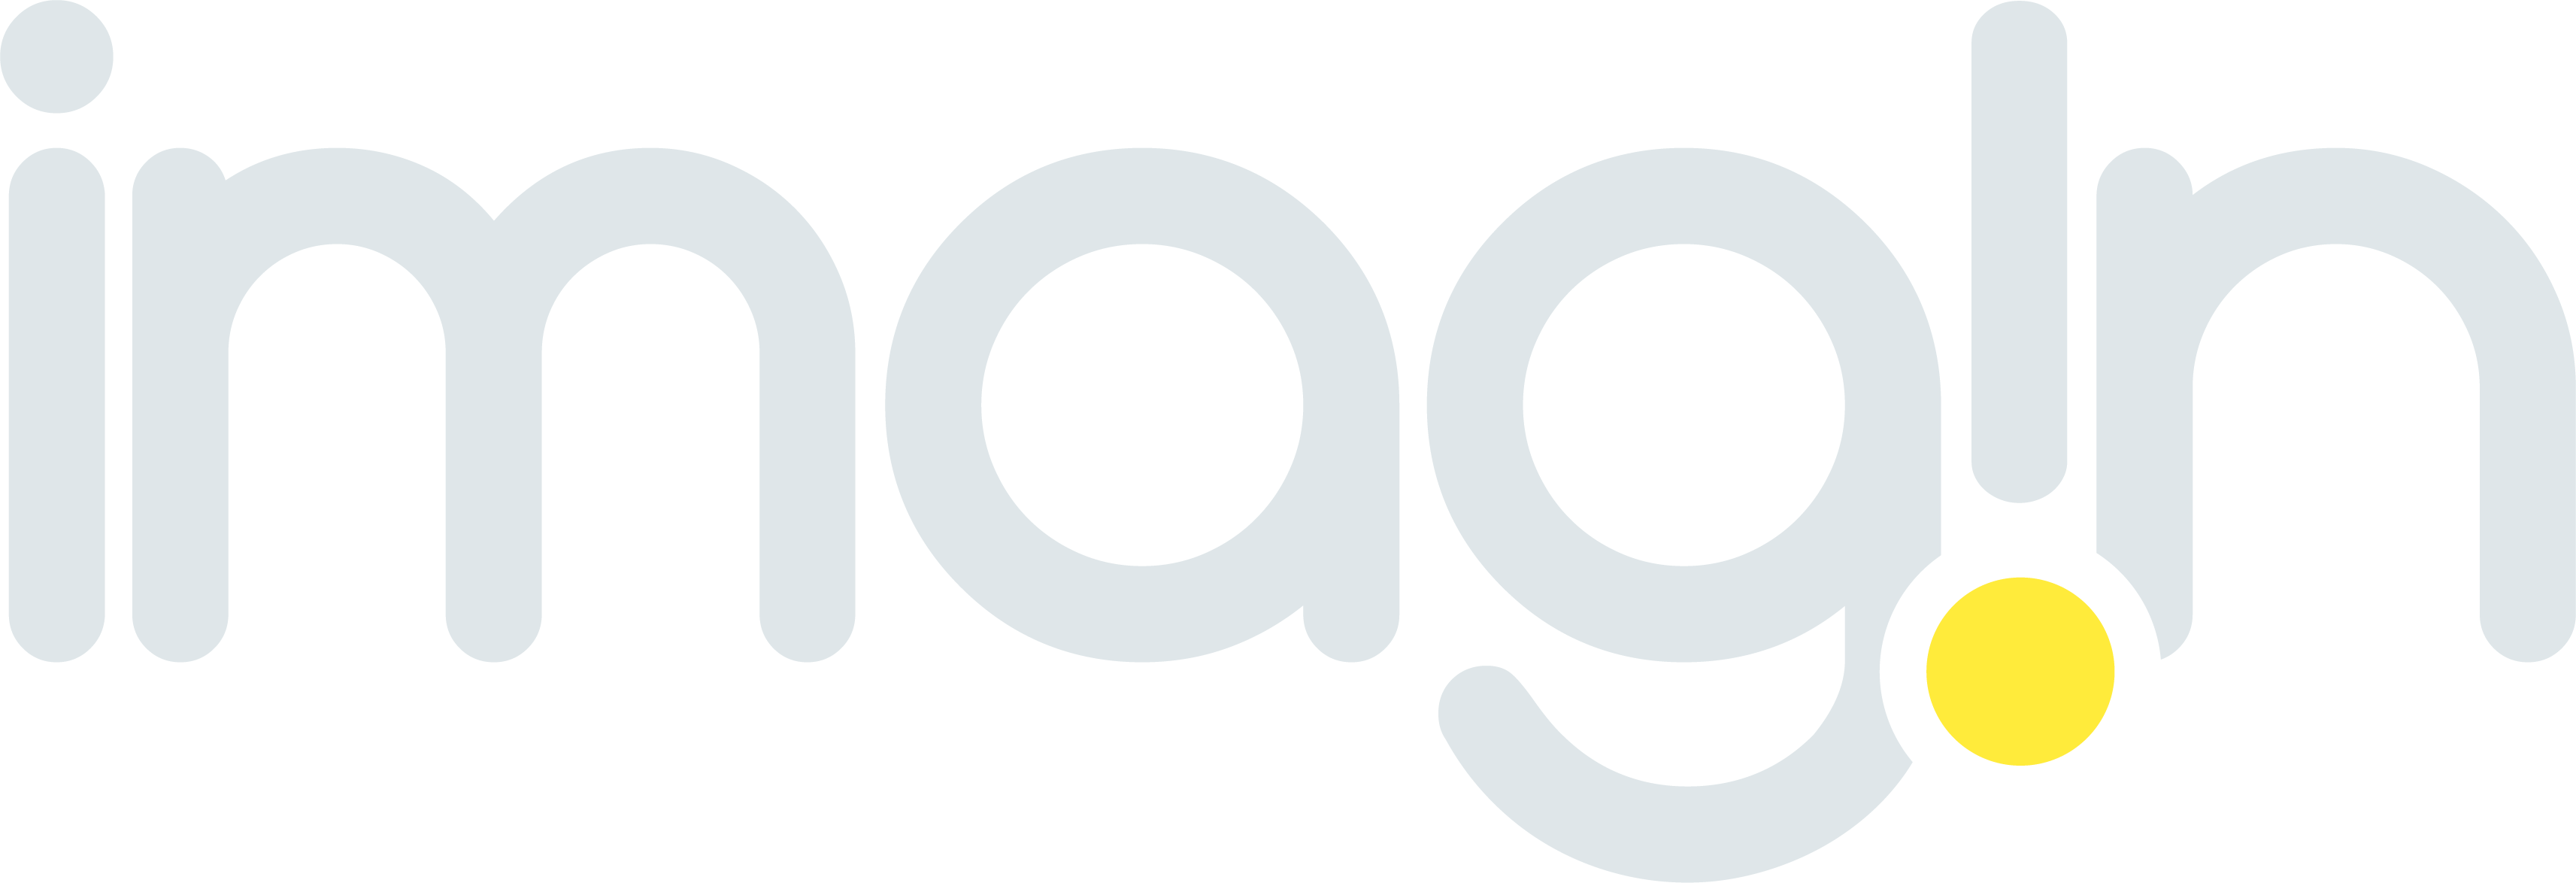 imagin logo